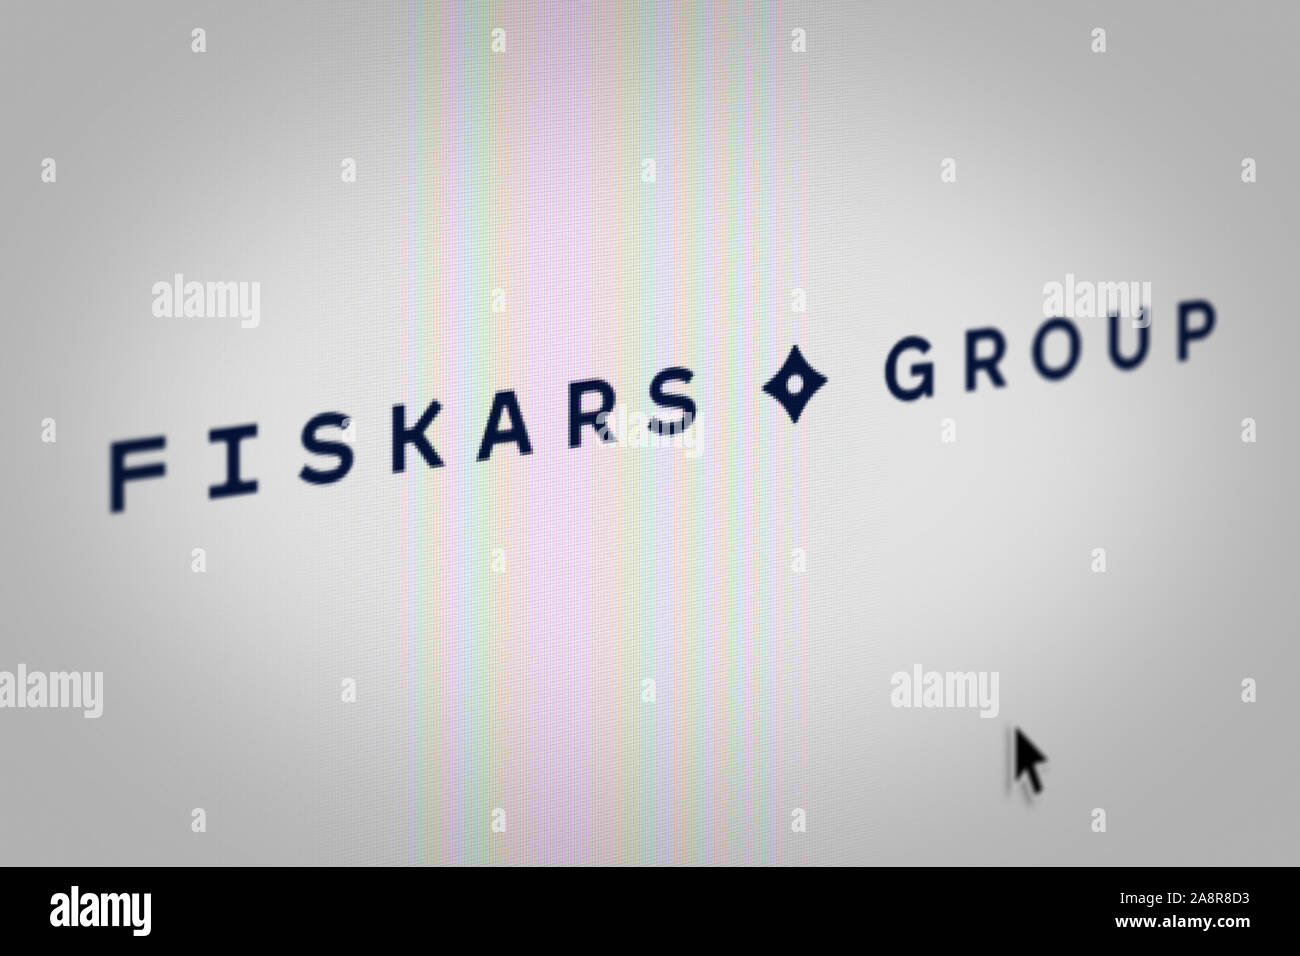 Fiskars Group Q1 results